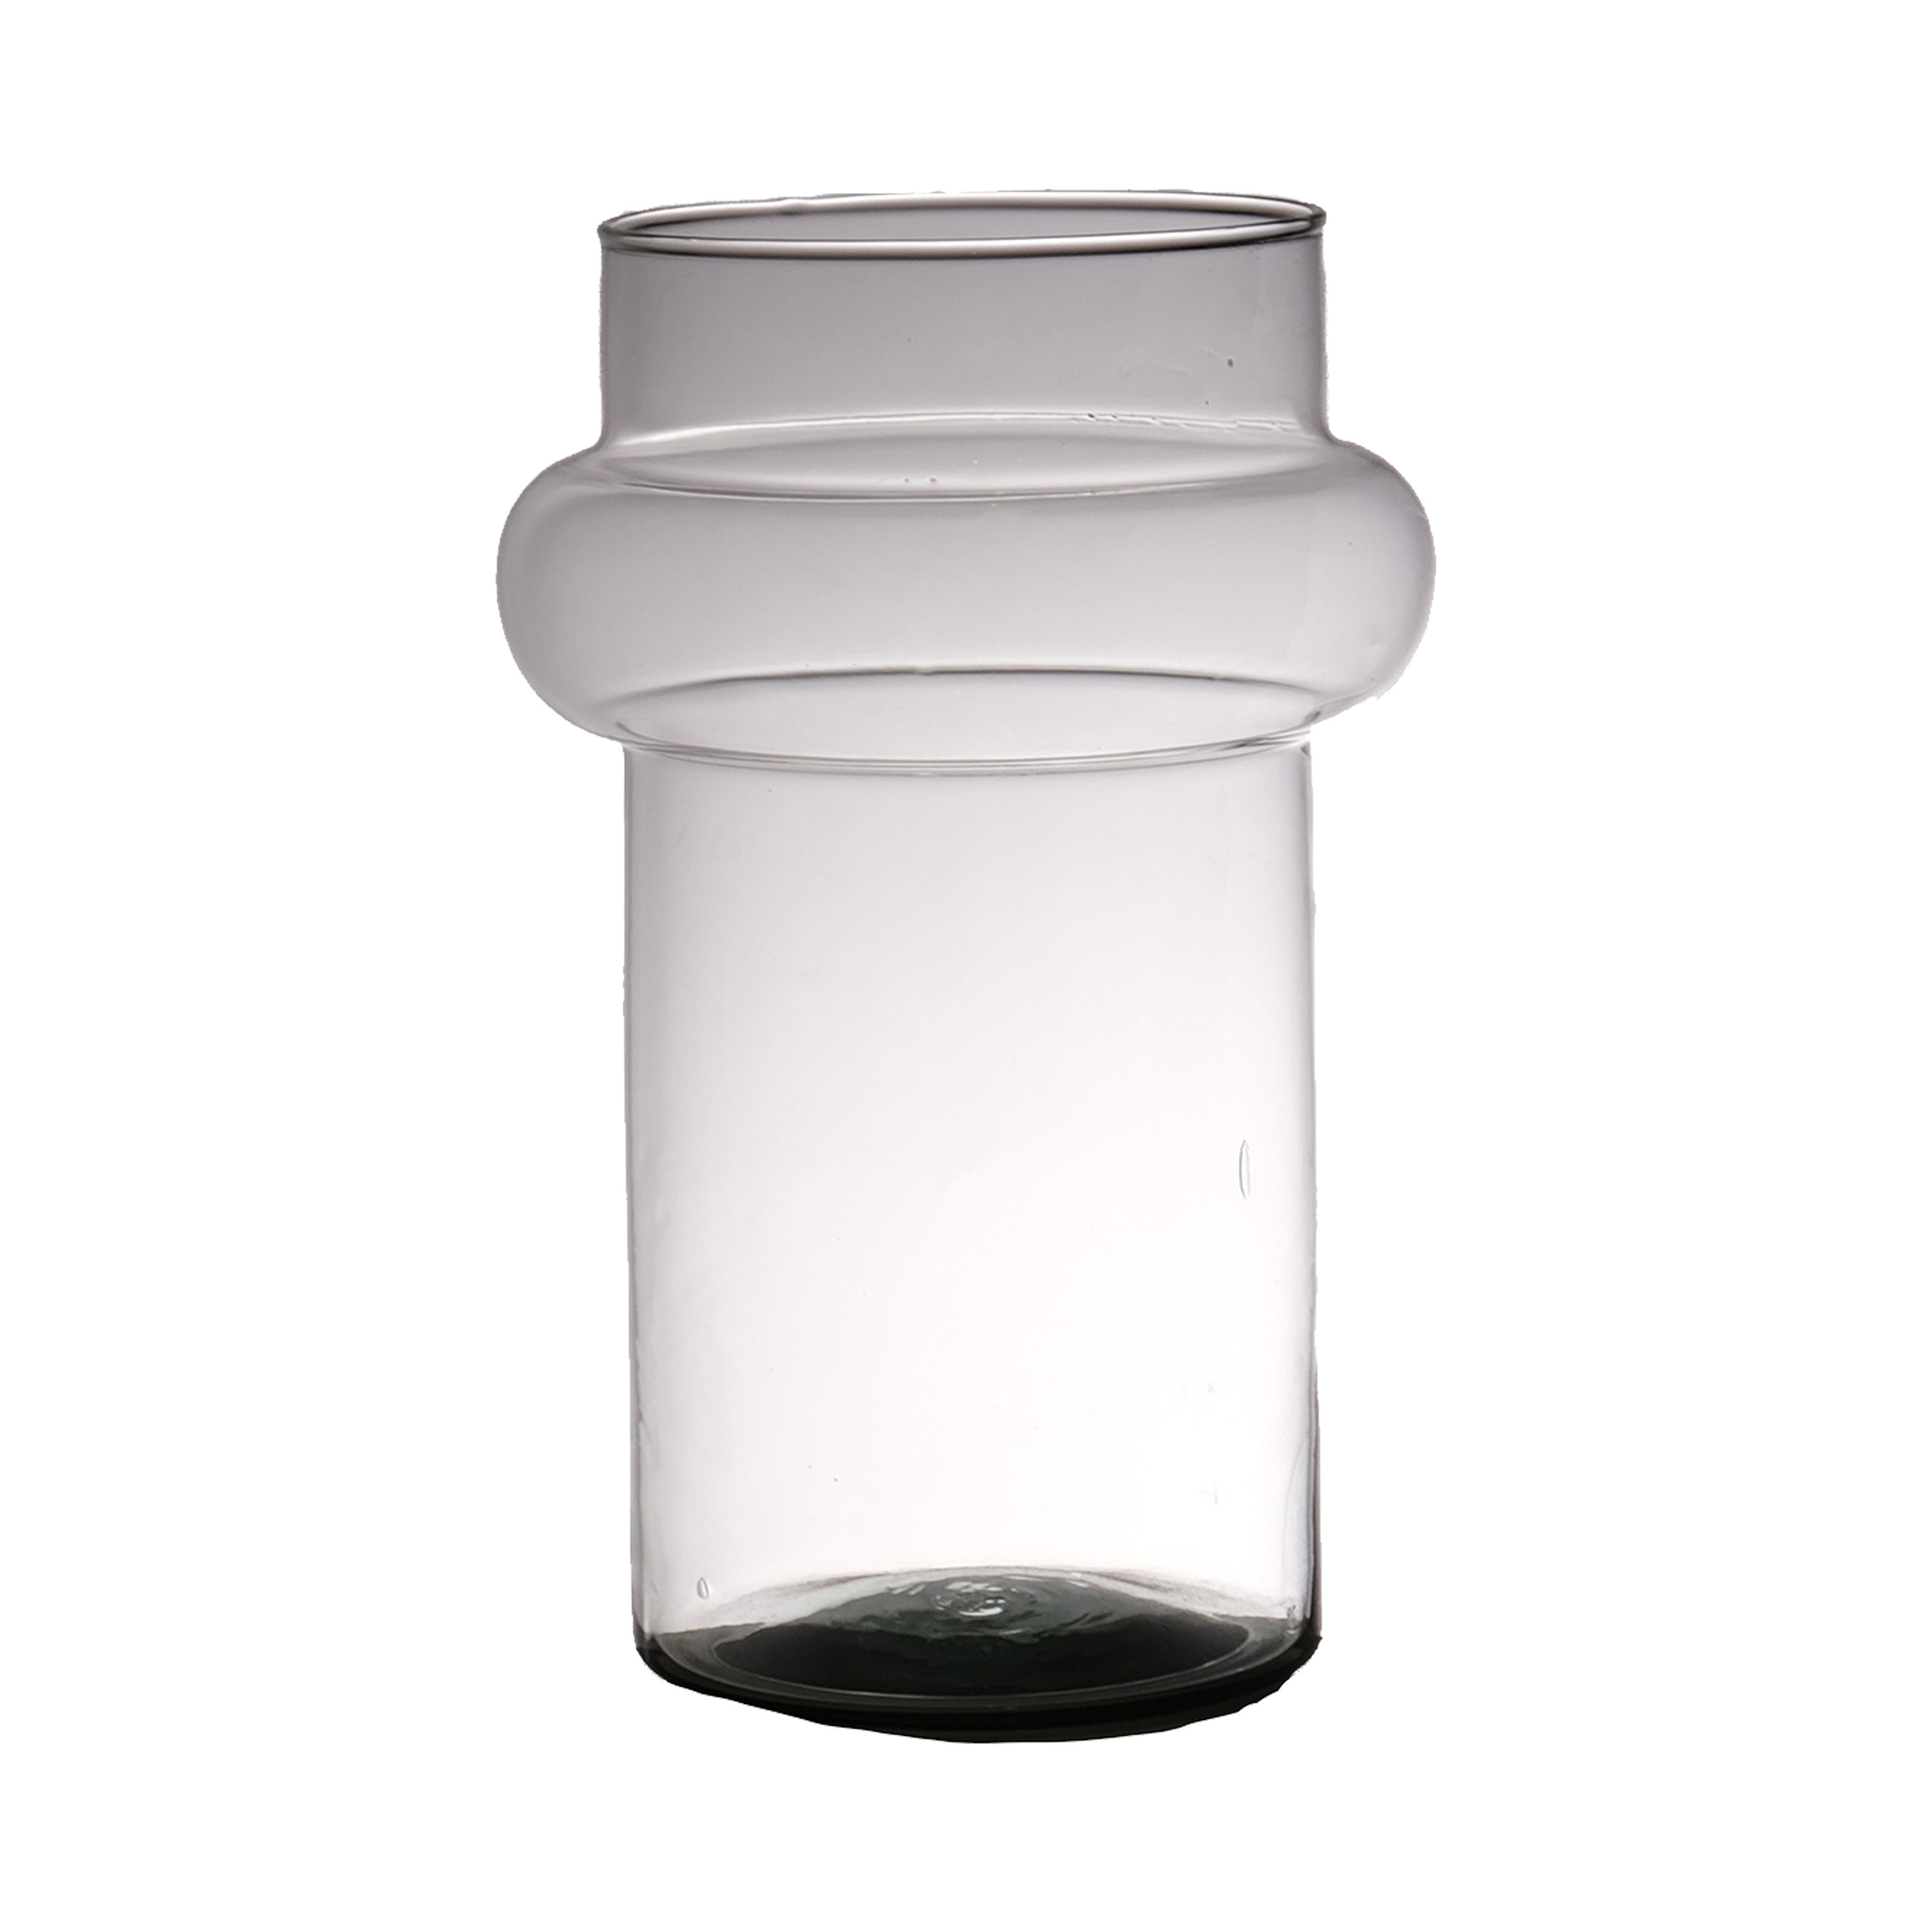 Hakbijl Glass Bloemenvaas Luna - transparant - eco glas - D16 x H25 cm - cilinder vaas -